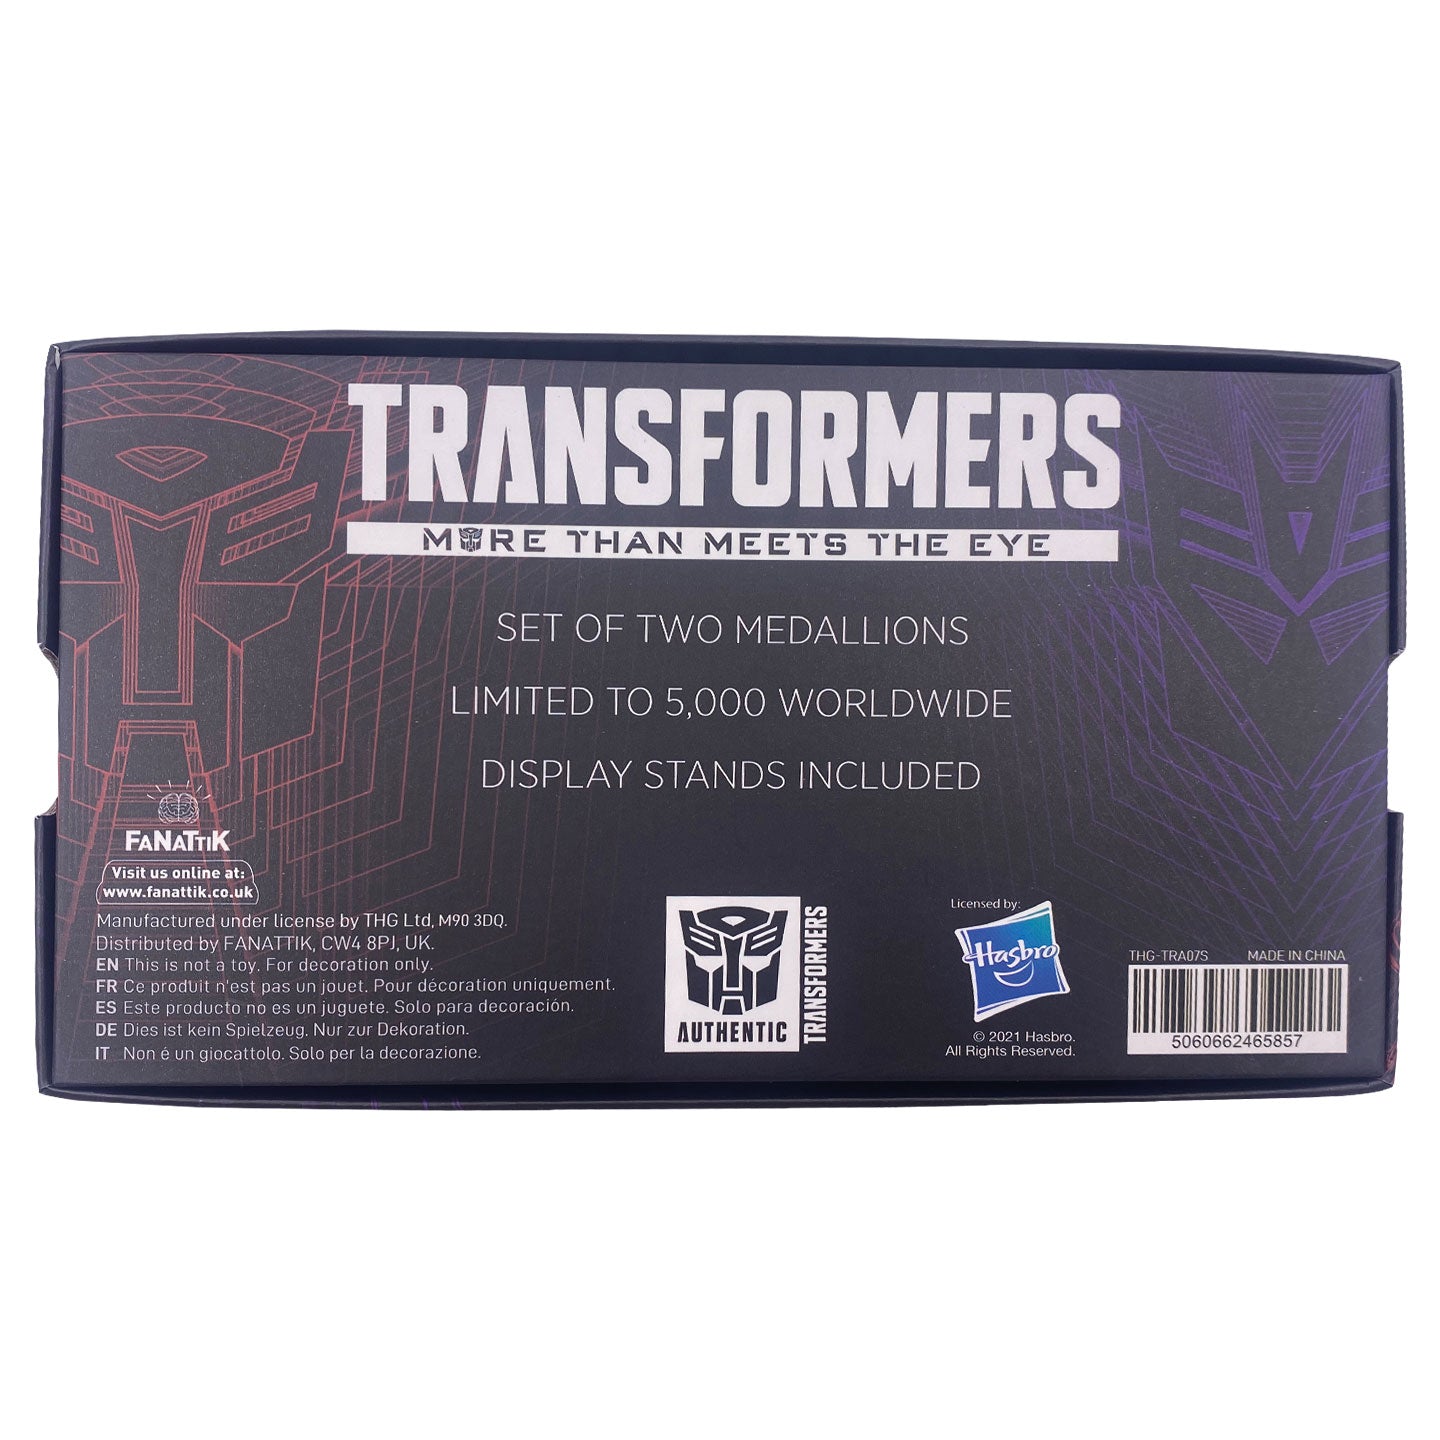 Transformers Limited Edition Medallion Set